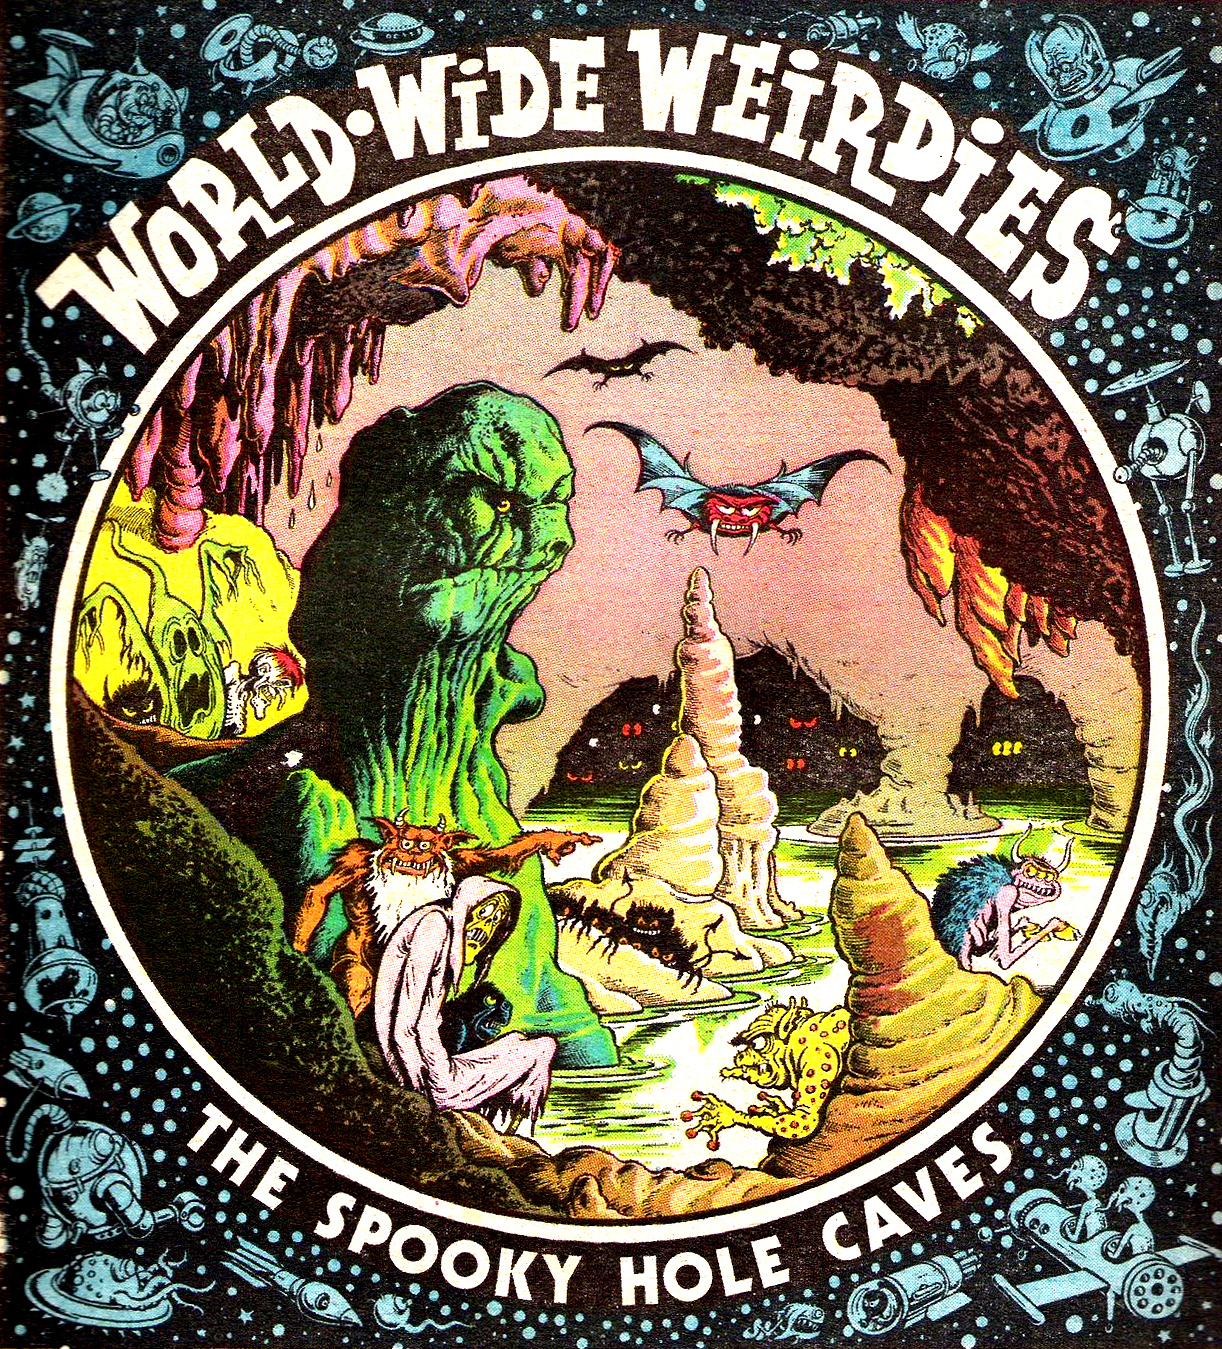 Ken Reid - World Wide Weirdies 54